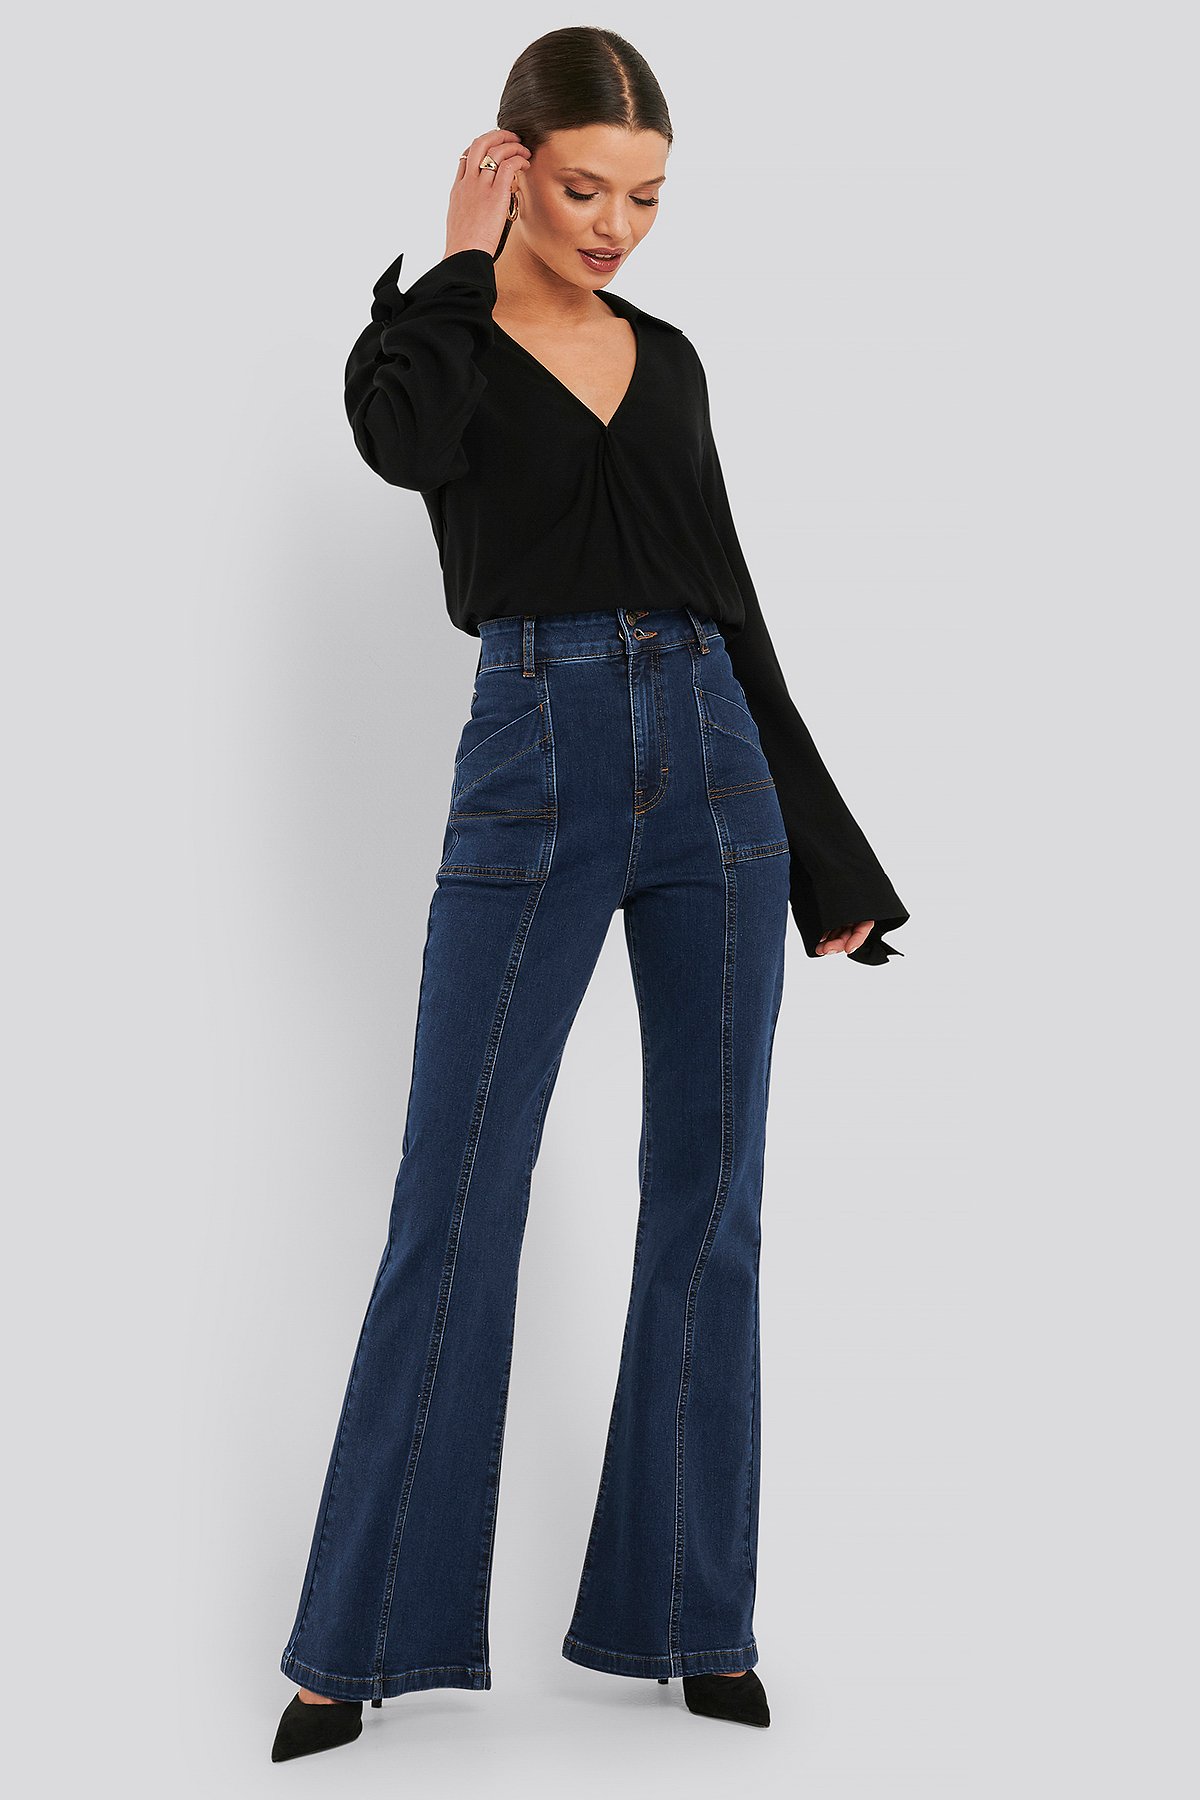 https://www.na-kd.com/globalassets/nakd_high_waist_front_seam_flare_jeans_1018-005086-8192_01c.jpg?ref=B8EBA31414